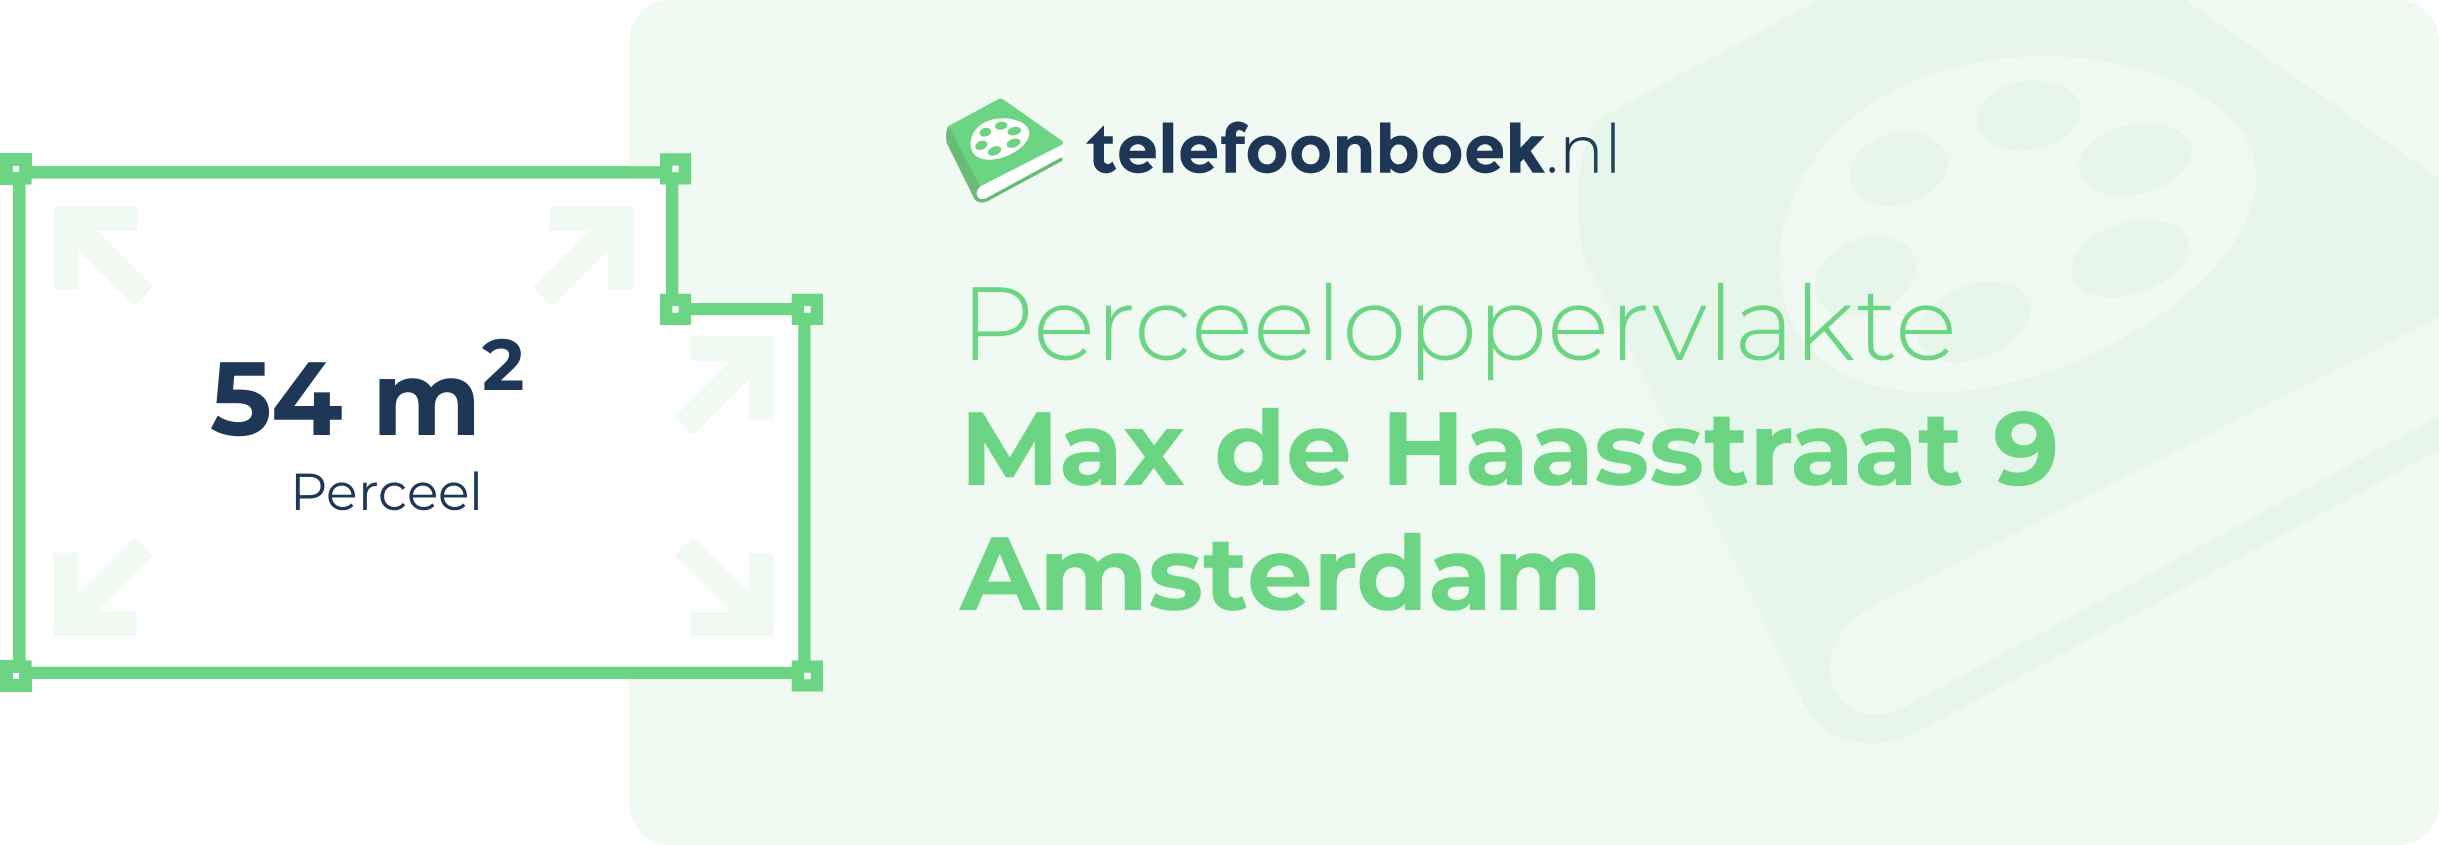 Perceeloppervlakte Max De Haasstraat 9 Amsterdam